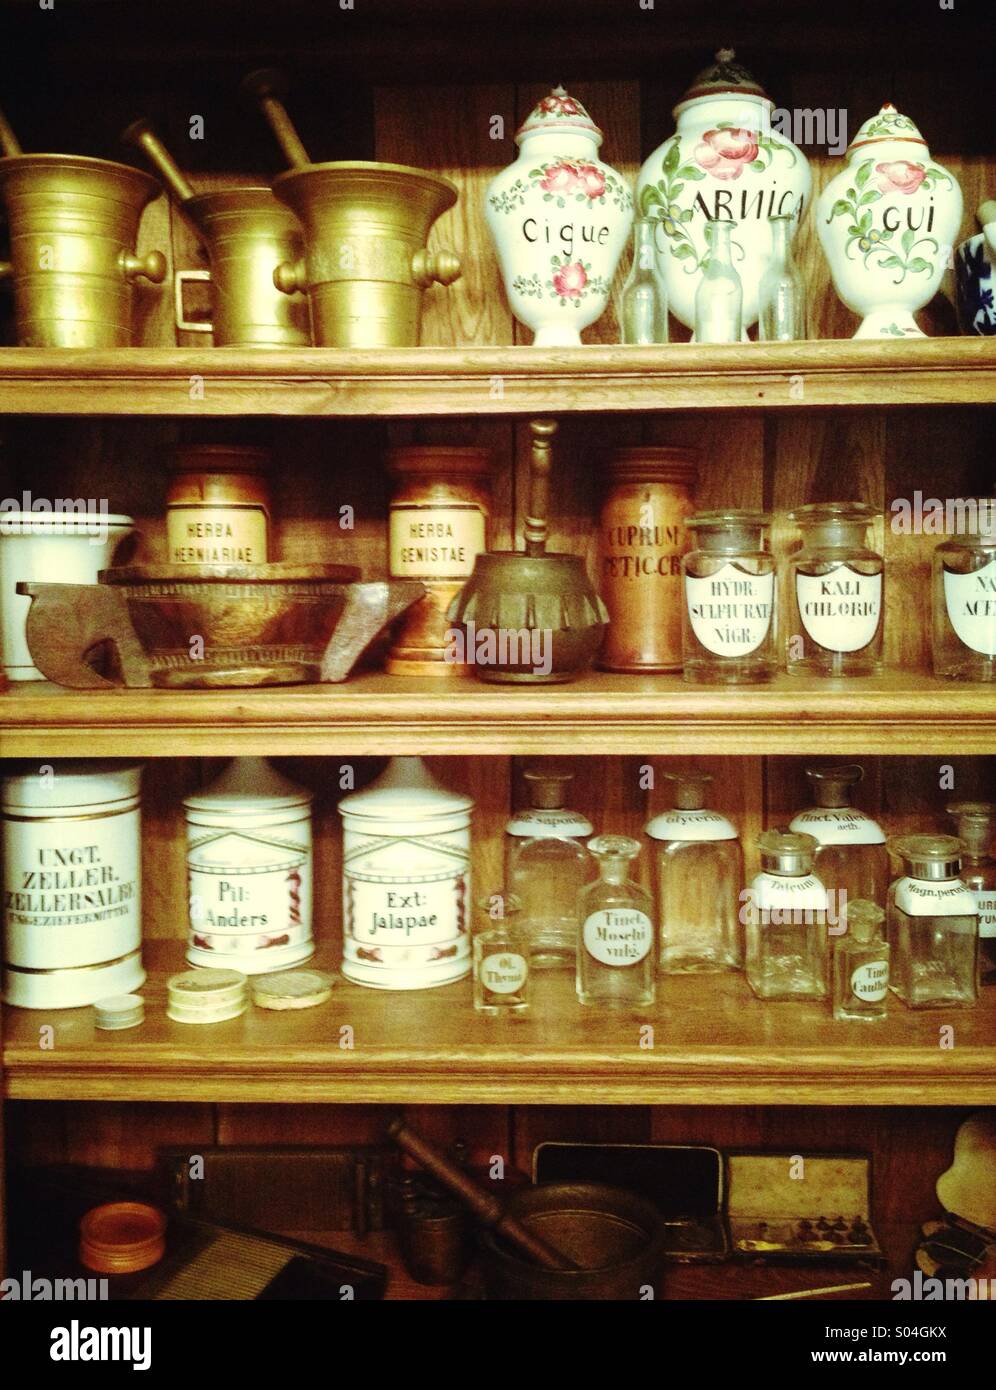 Apotheke, vintage speziale display sul ripiano Foto Stock